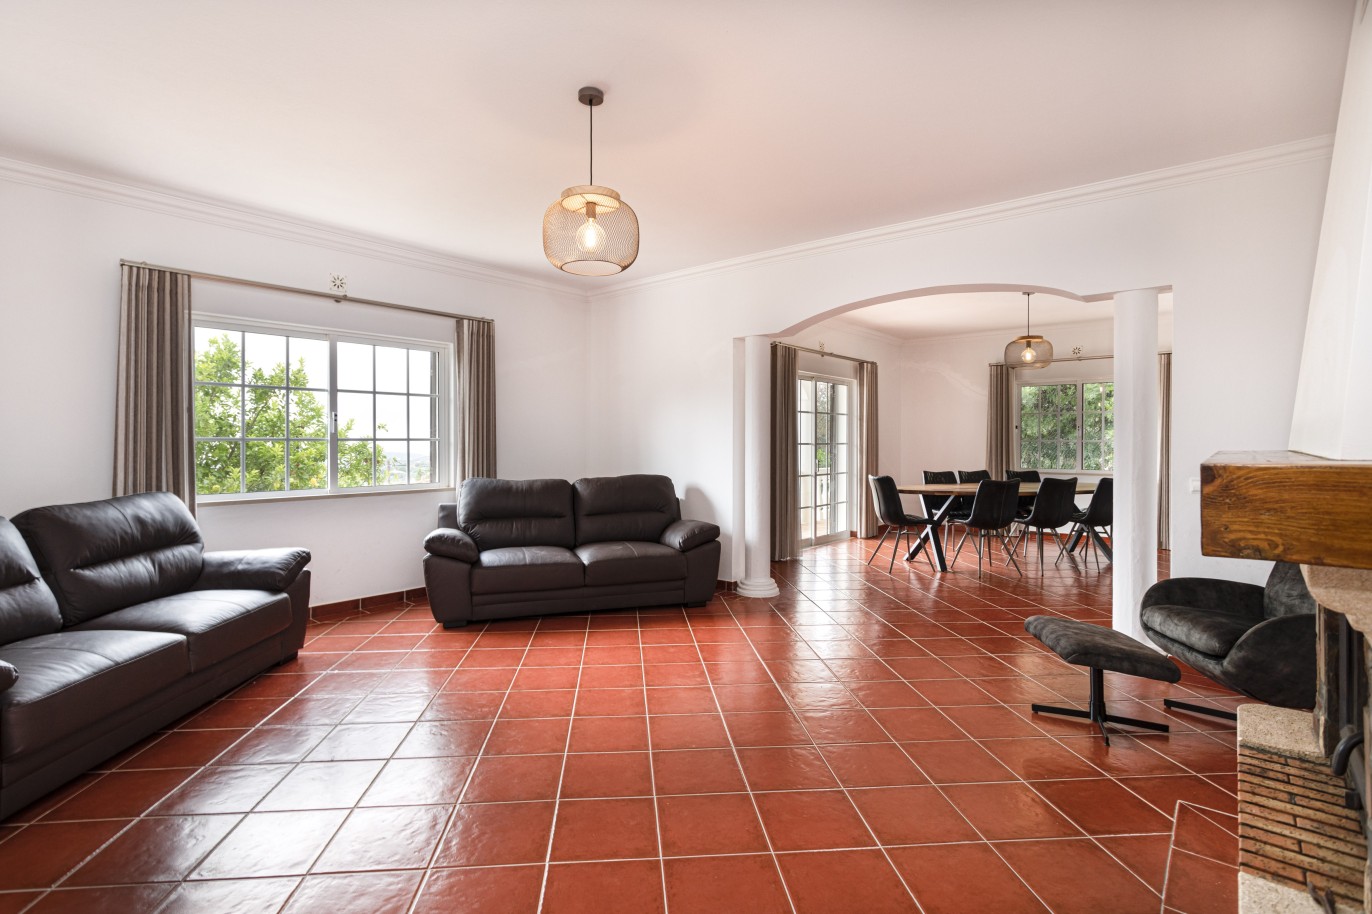 4-Bedroom Villa with swimming pool, for sale in Boliqueime, Loulé, Algarve_242624